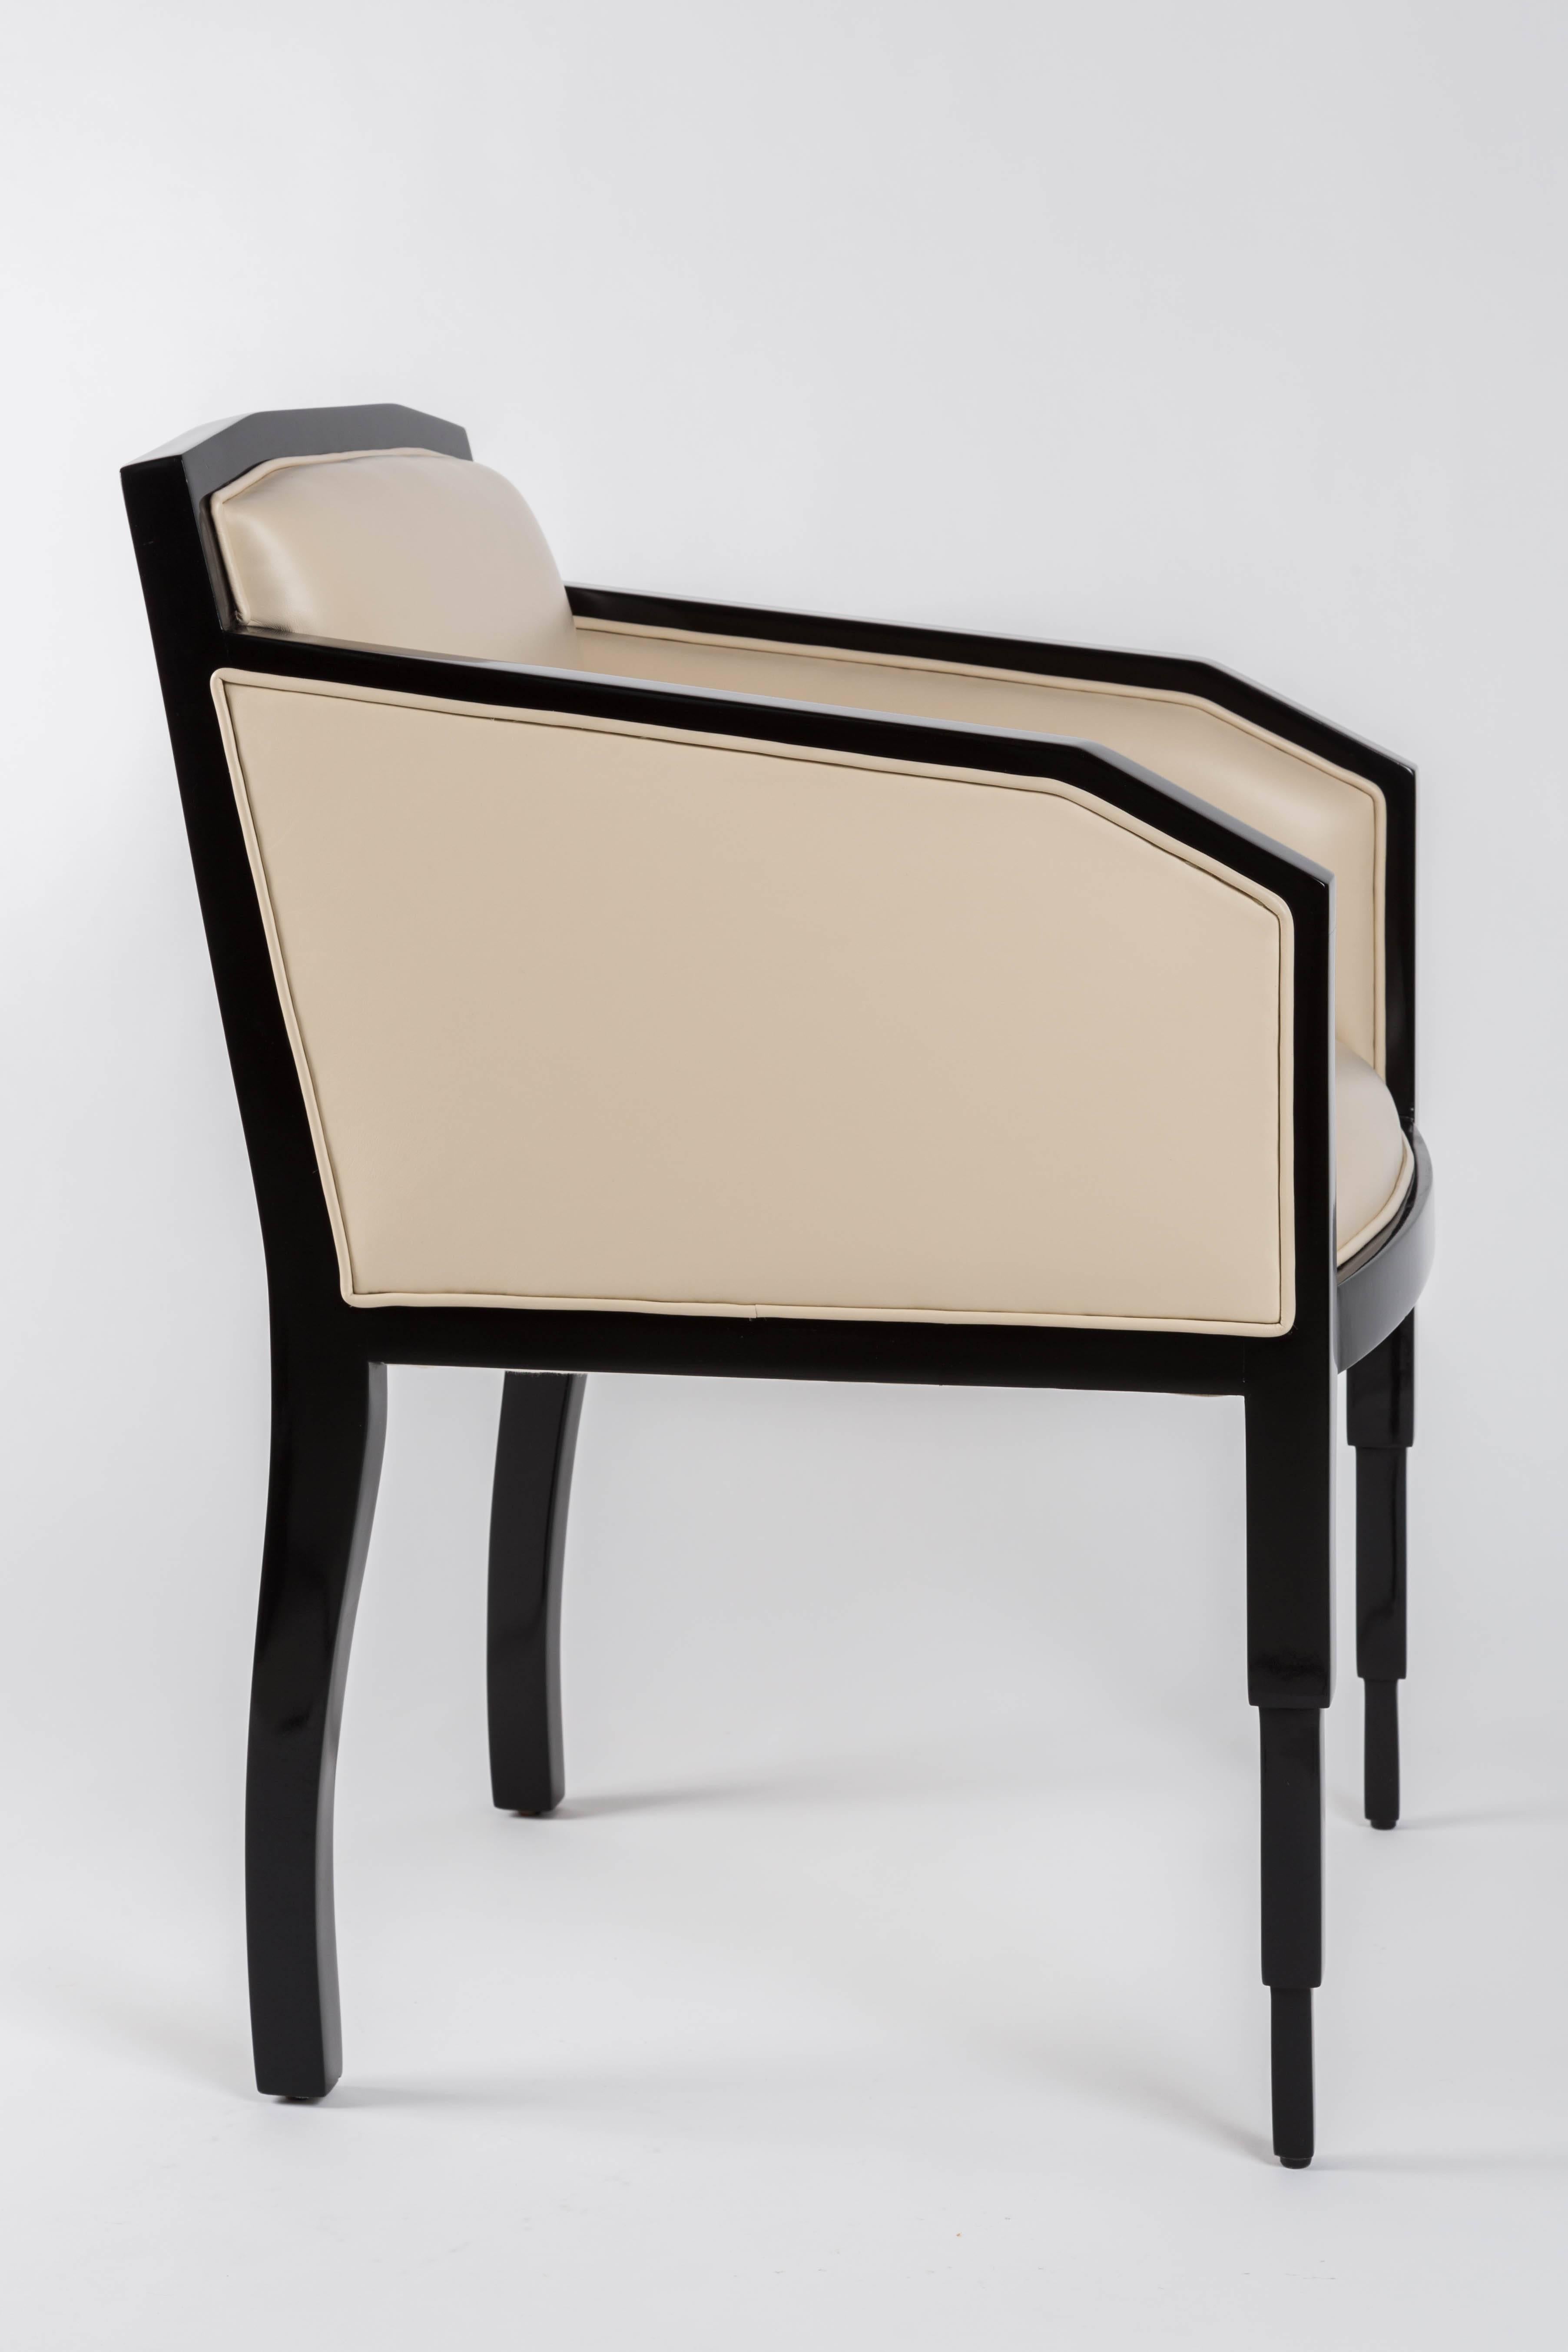 20th Century Pair of Art Deco Chairs